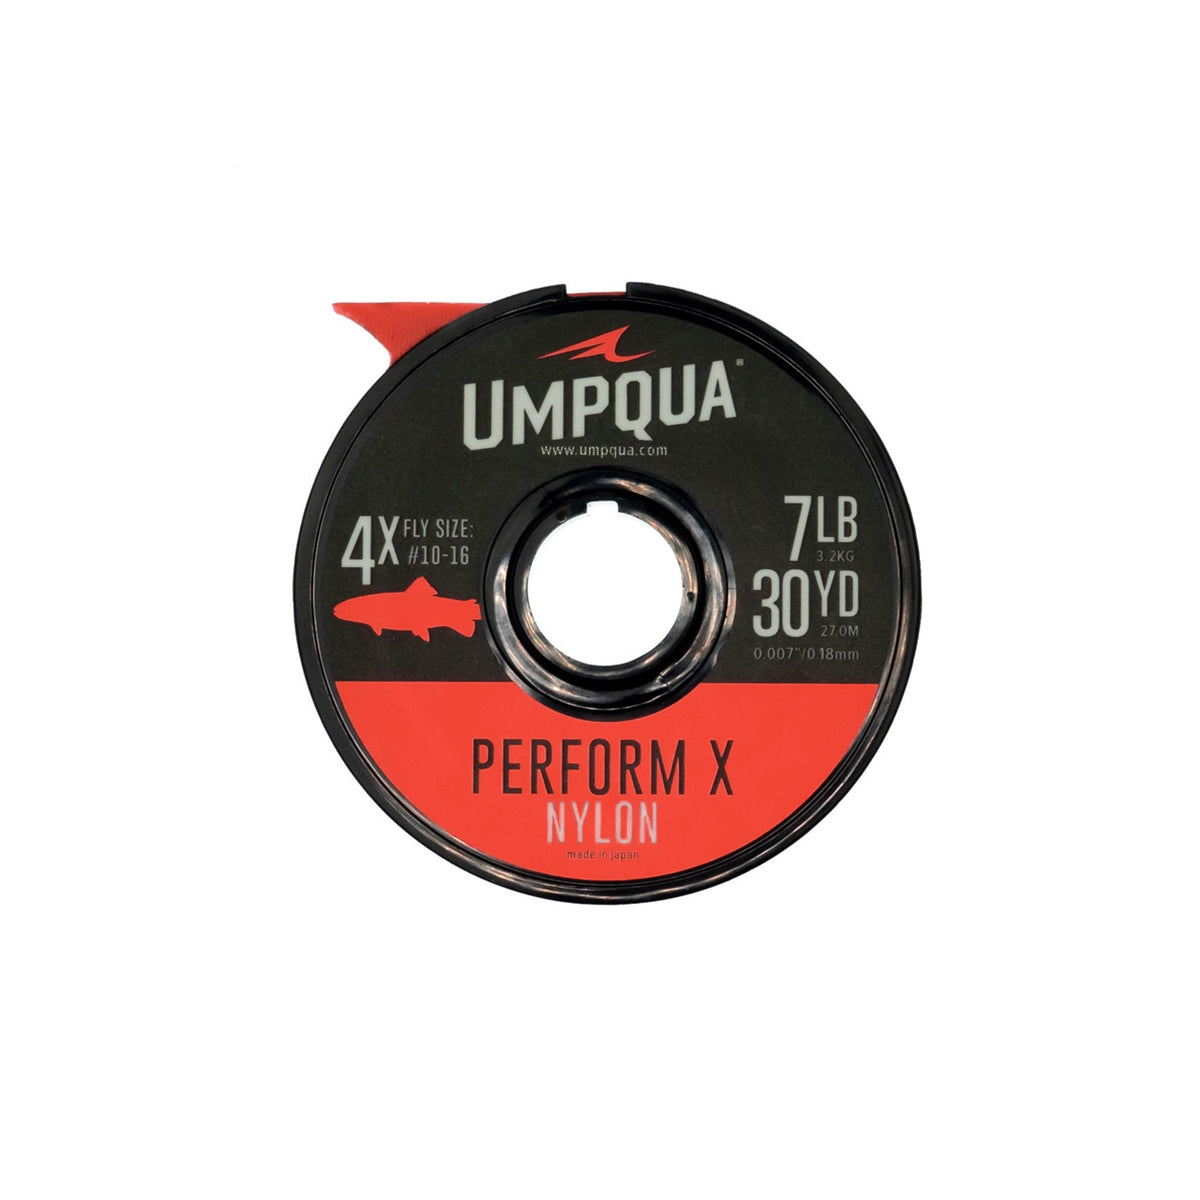 Umpqua Perform x Trout Nylon Tippet 100yds - 5X